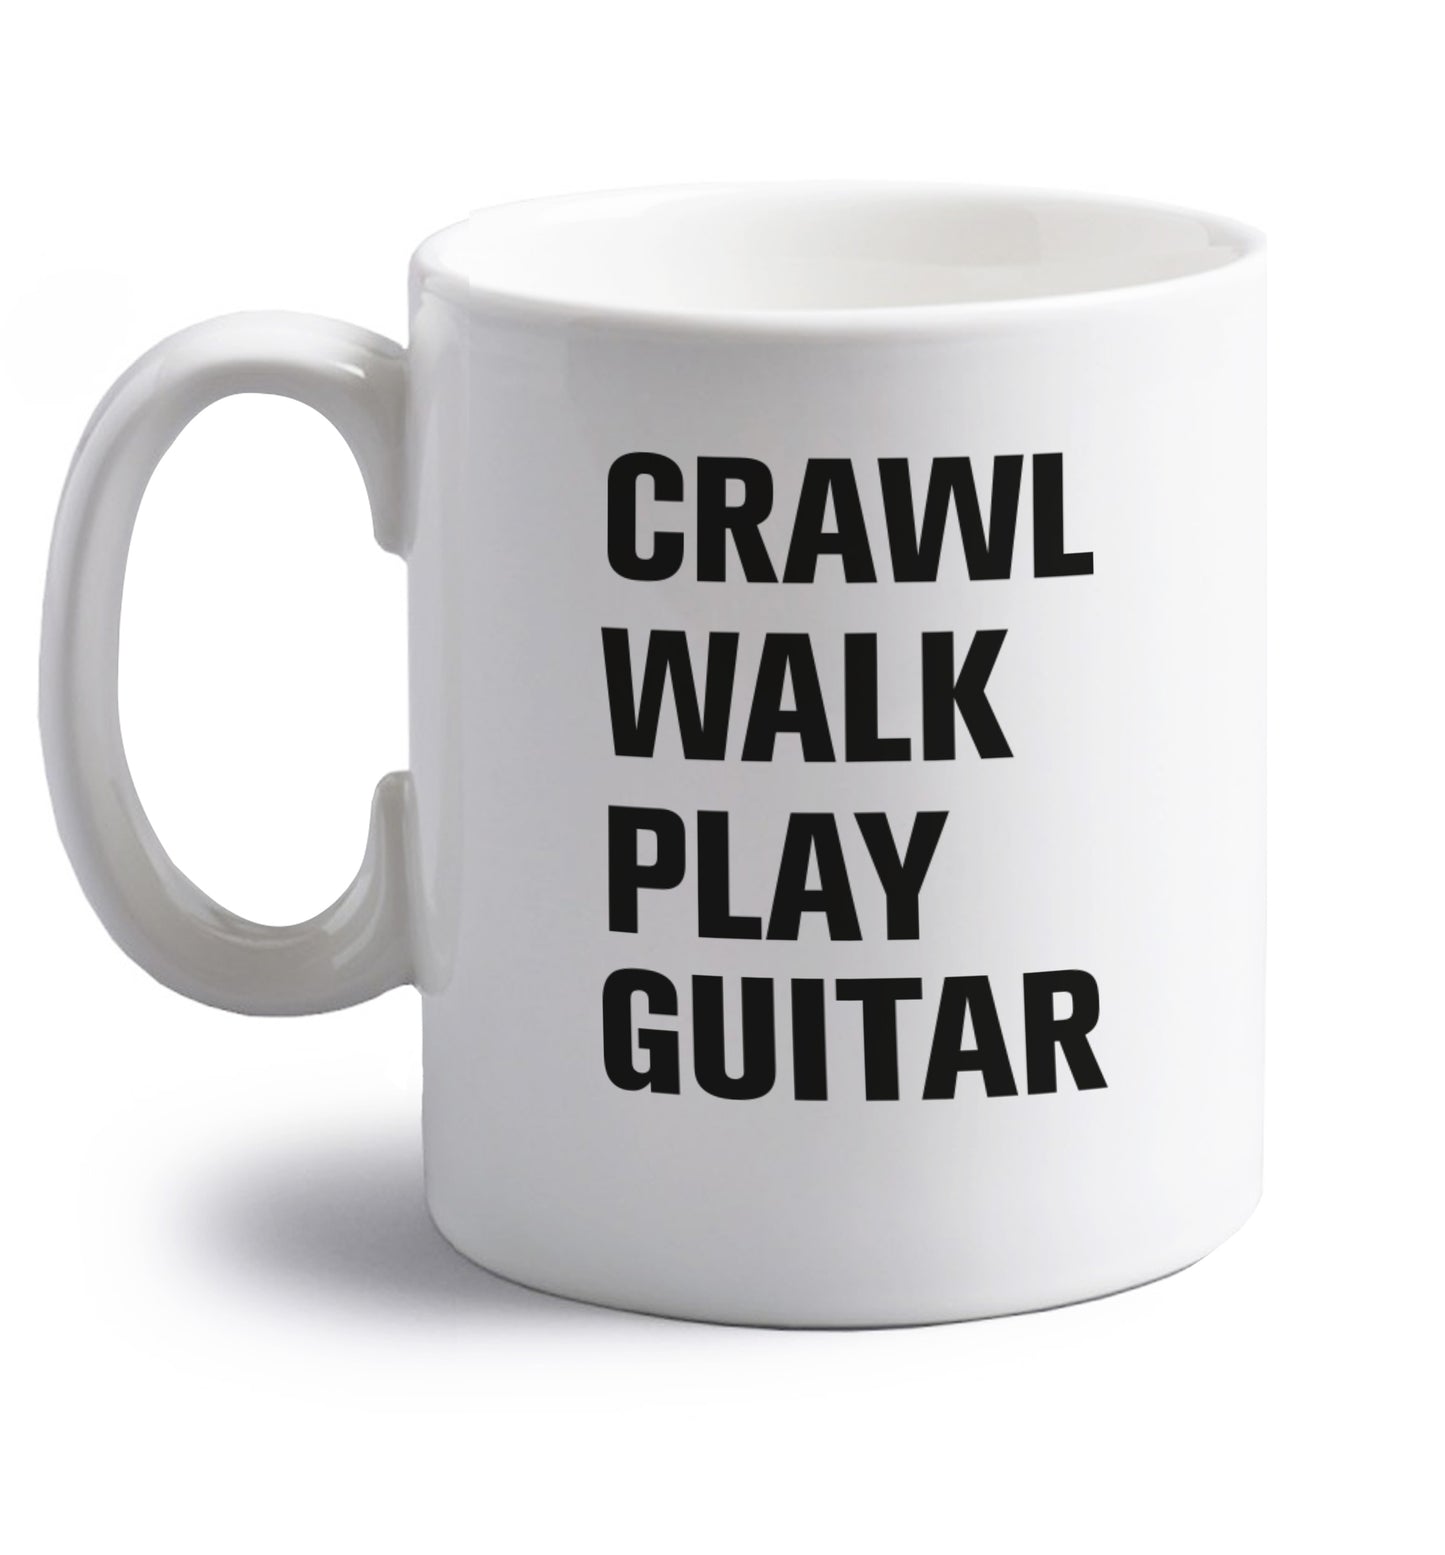 Crawl walk play guitar right handed white ceramic mug 